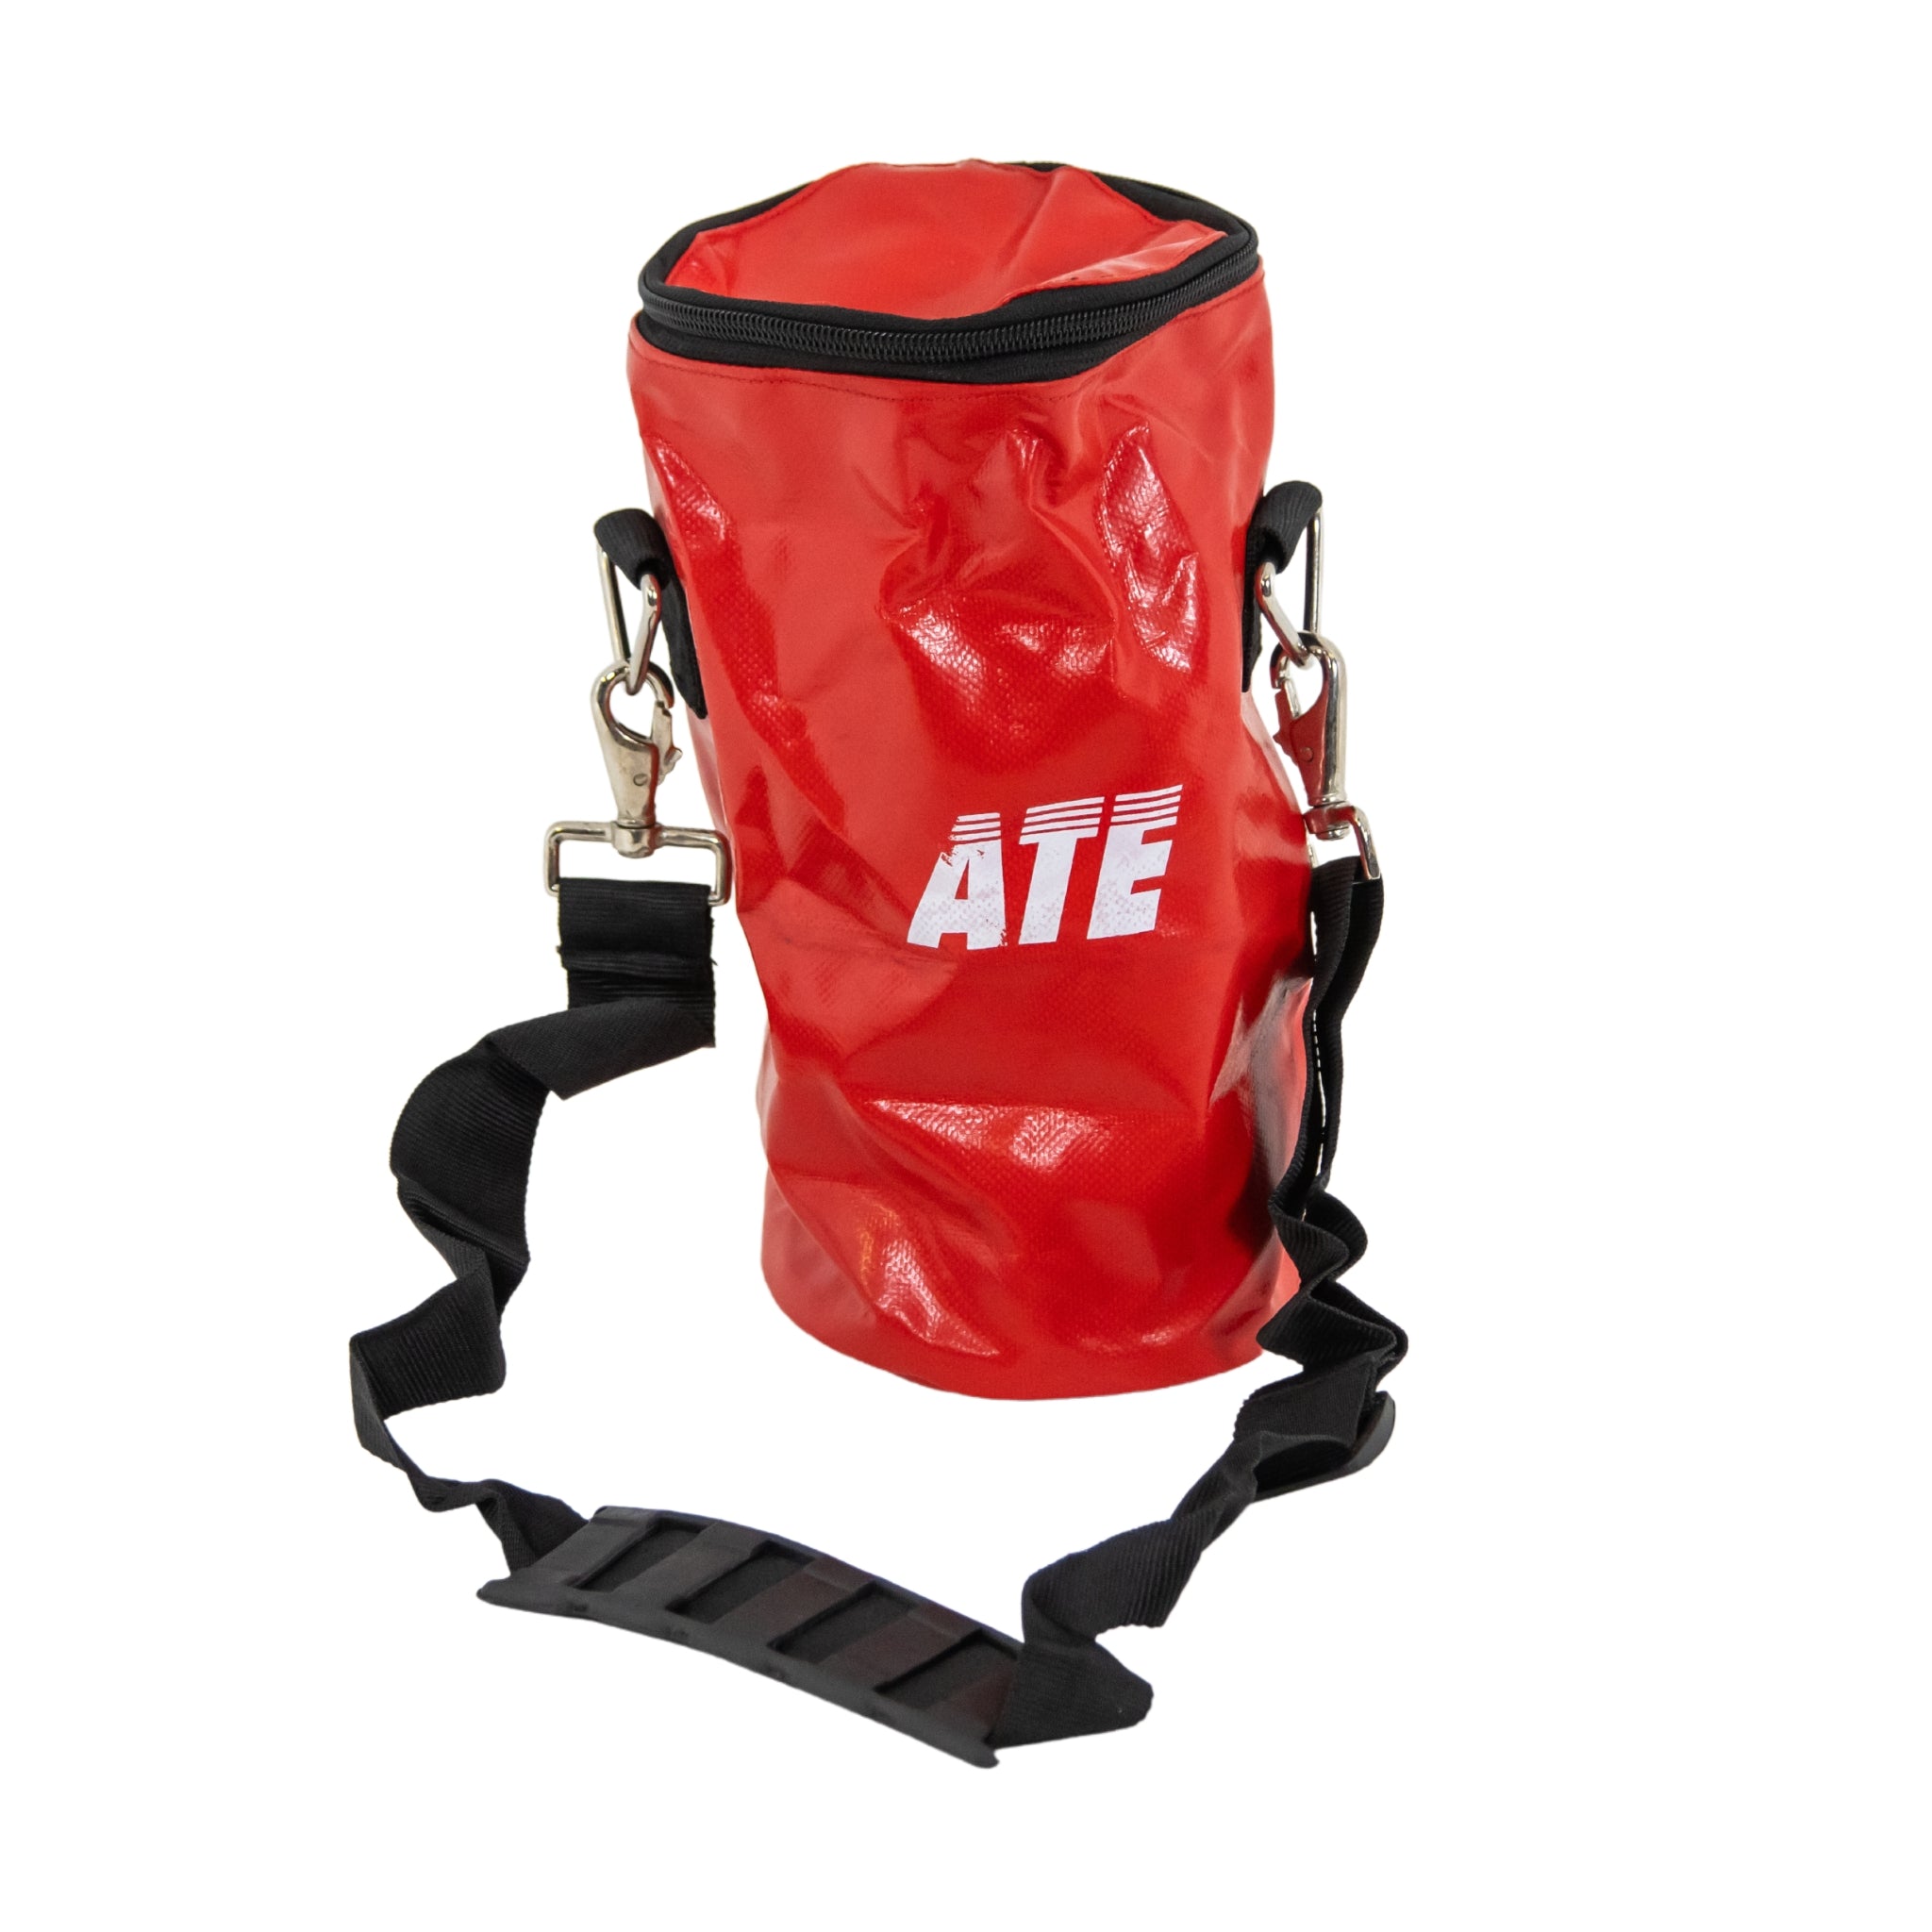 ATE Shot Kit bag | Red hardwearing fabric and black shoulder strap| Carries multiple shot or  shot and kit